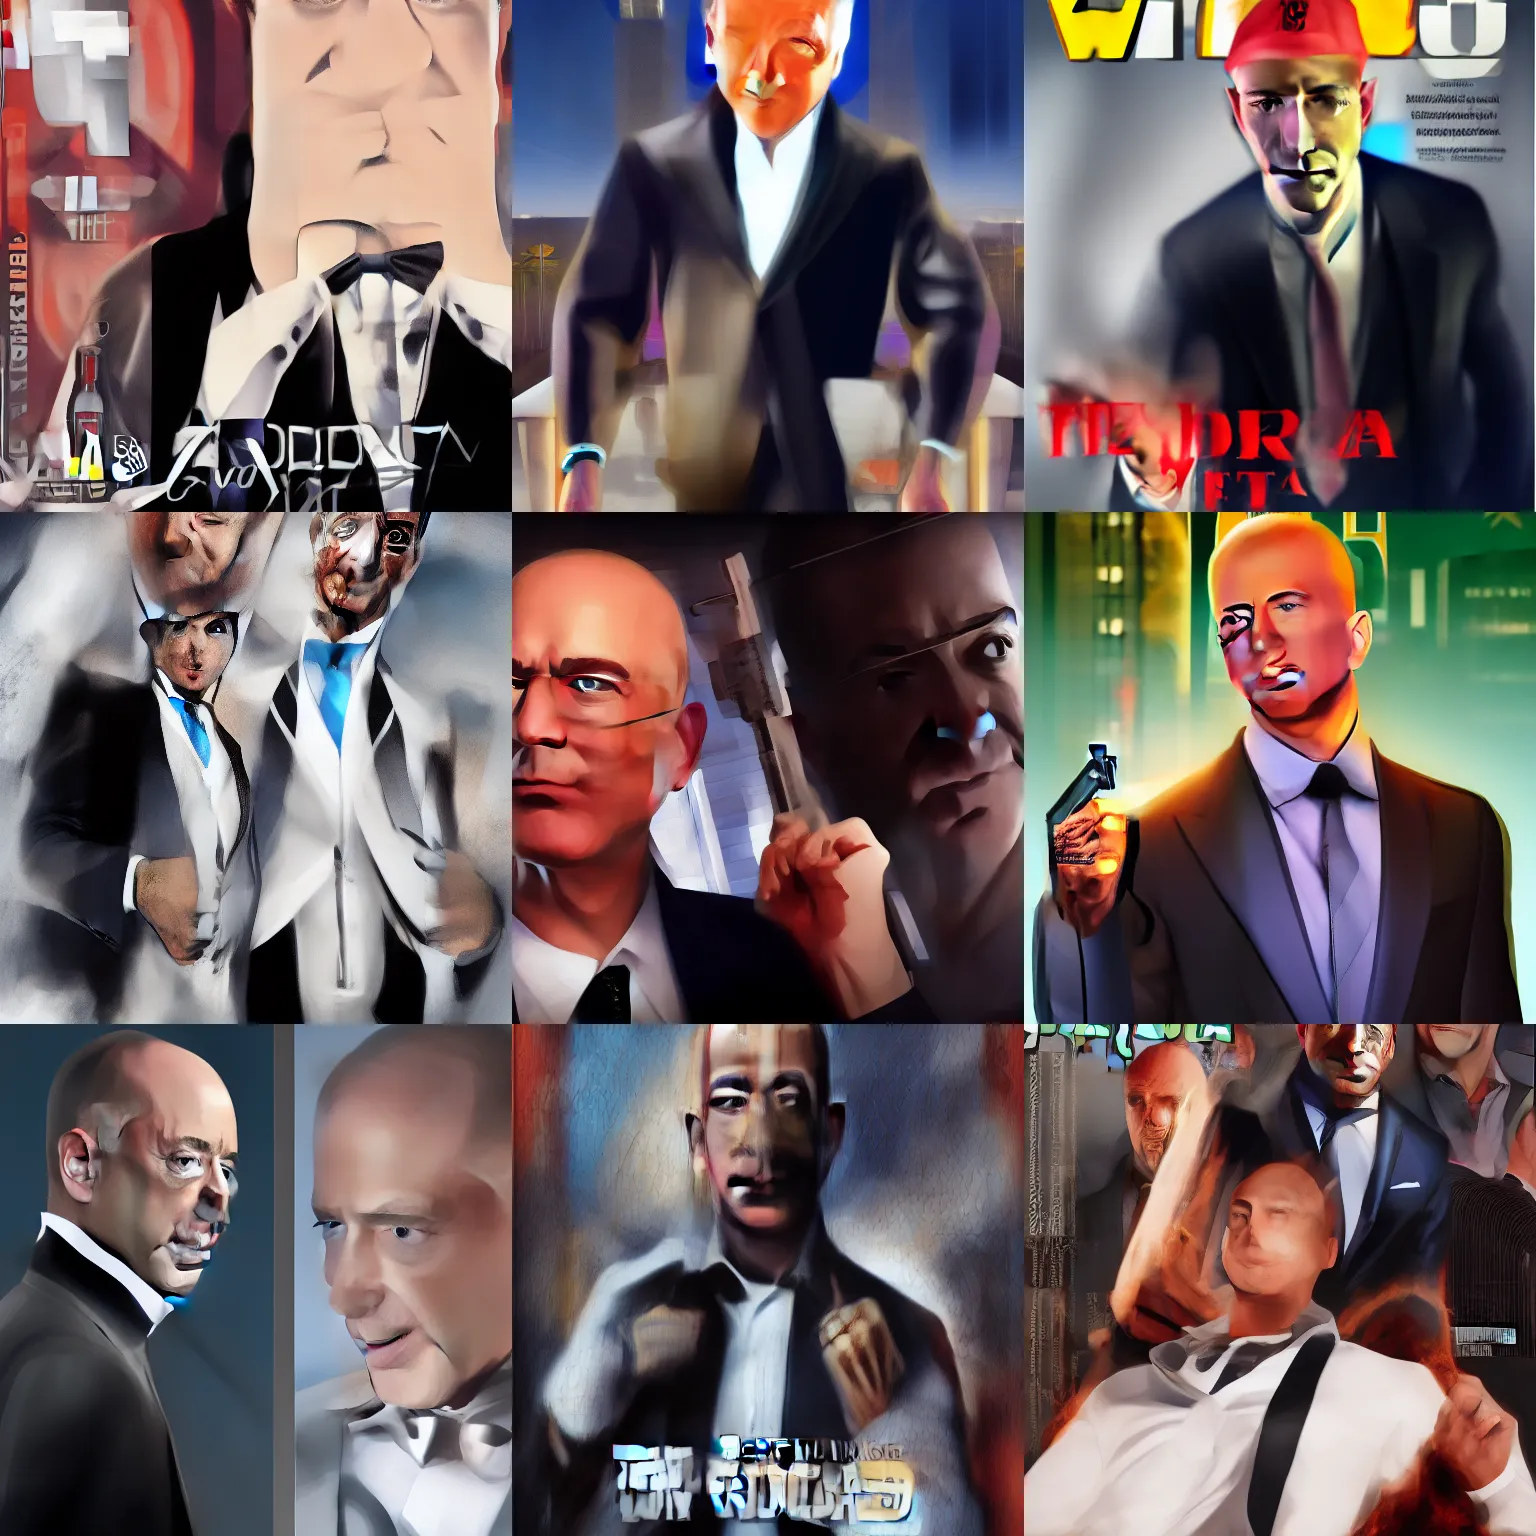 Prompt: Jeff Bezos CEO in Tuxedo GTA V cover, Ultra HD 4K art